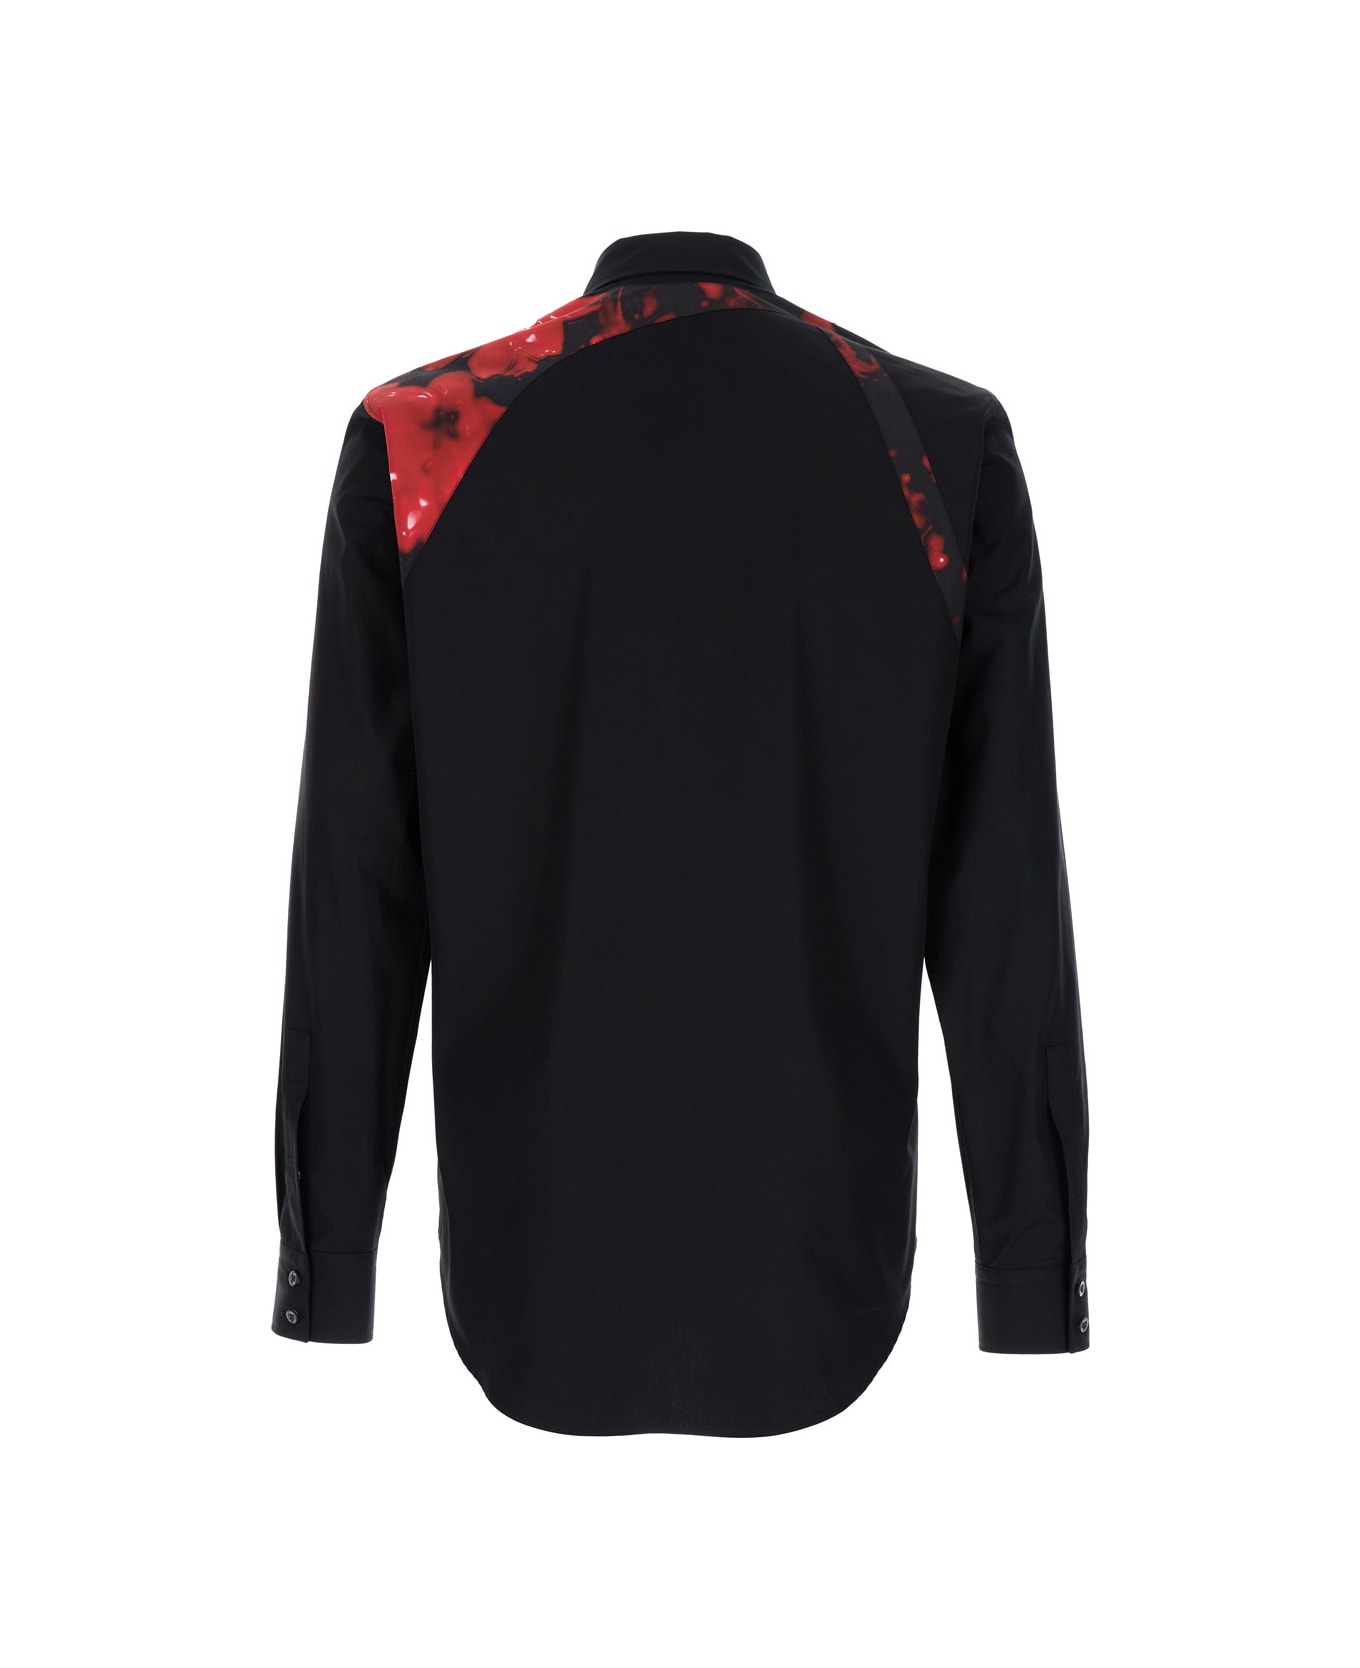 Alexander McQueen Black Shirt With Floral Print In Cotton Man - Black